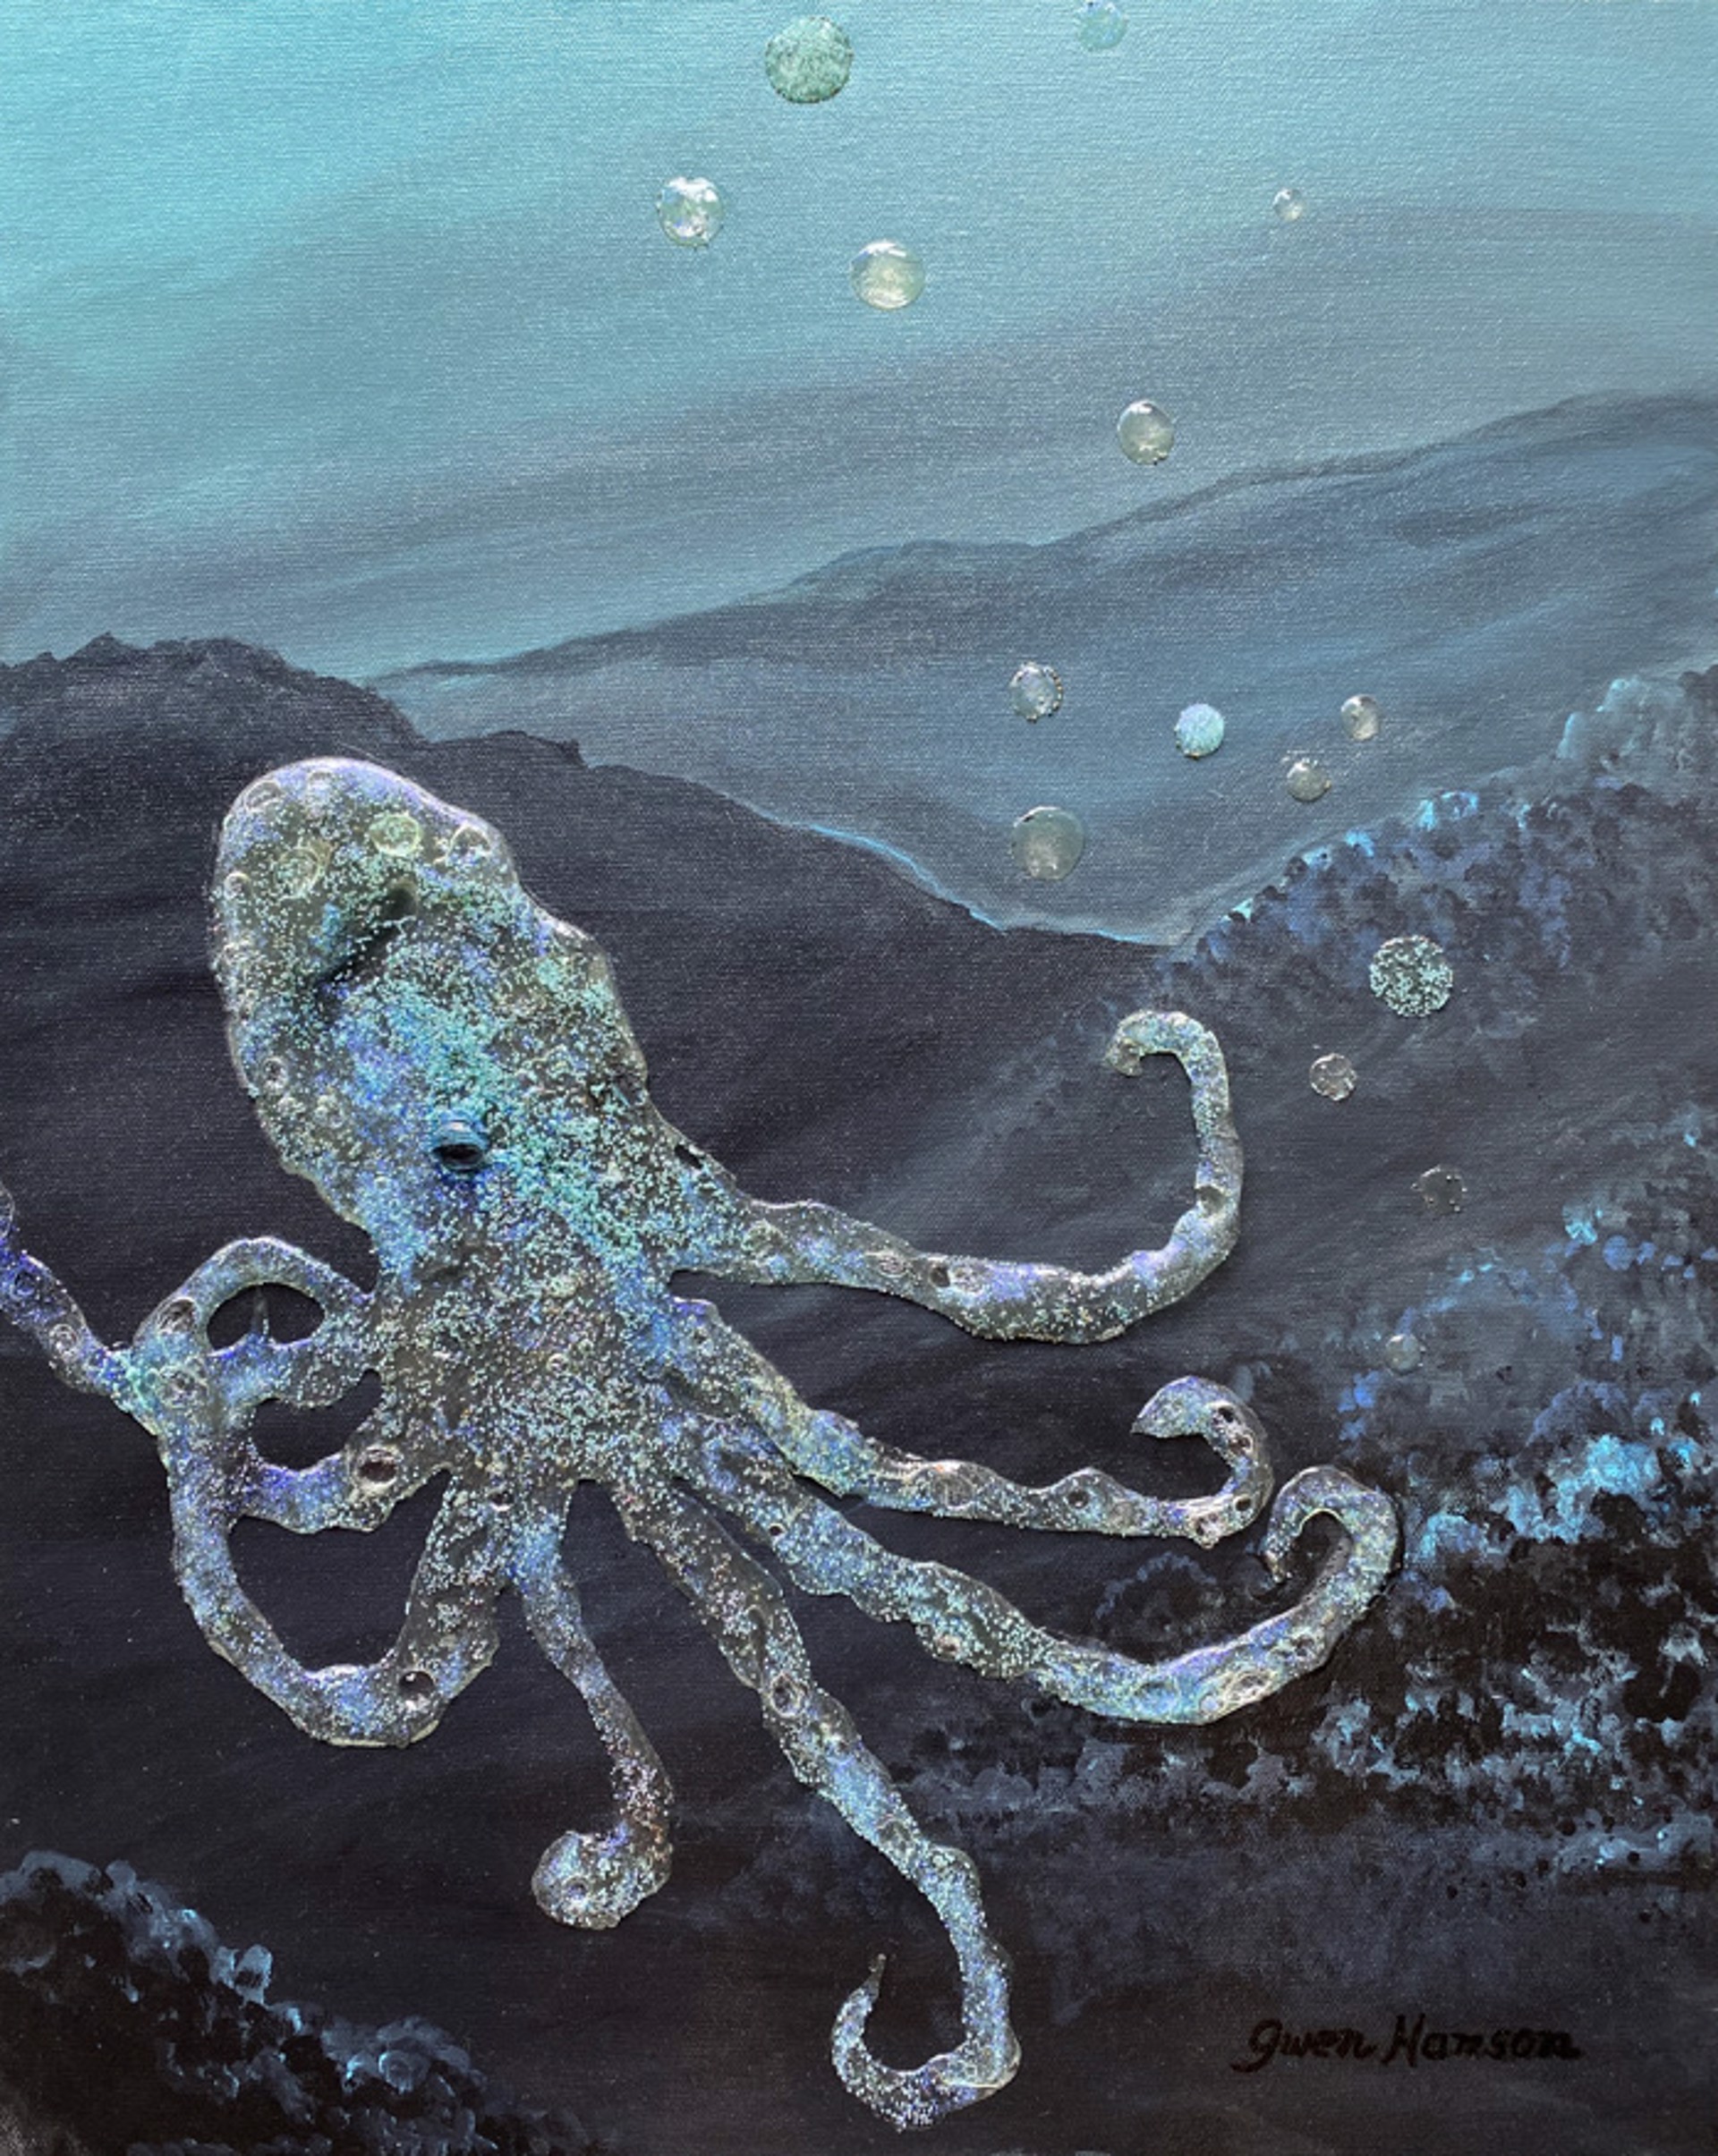 Octopus by Gwen Hanson